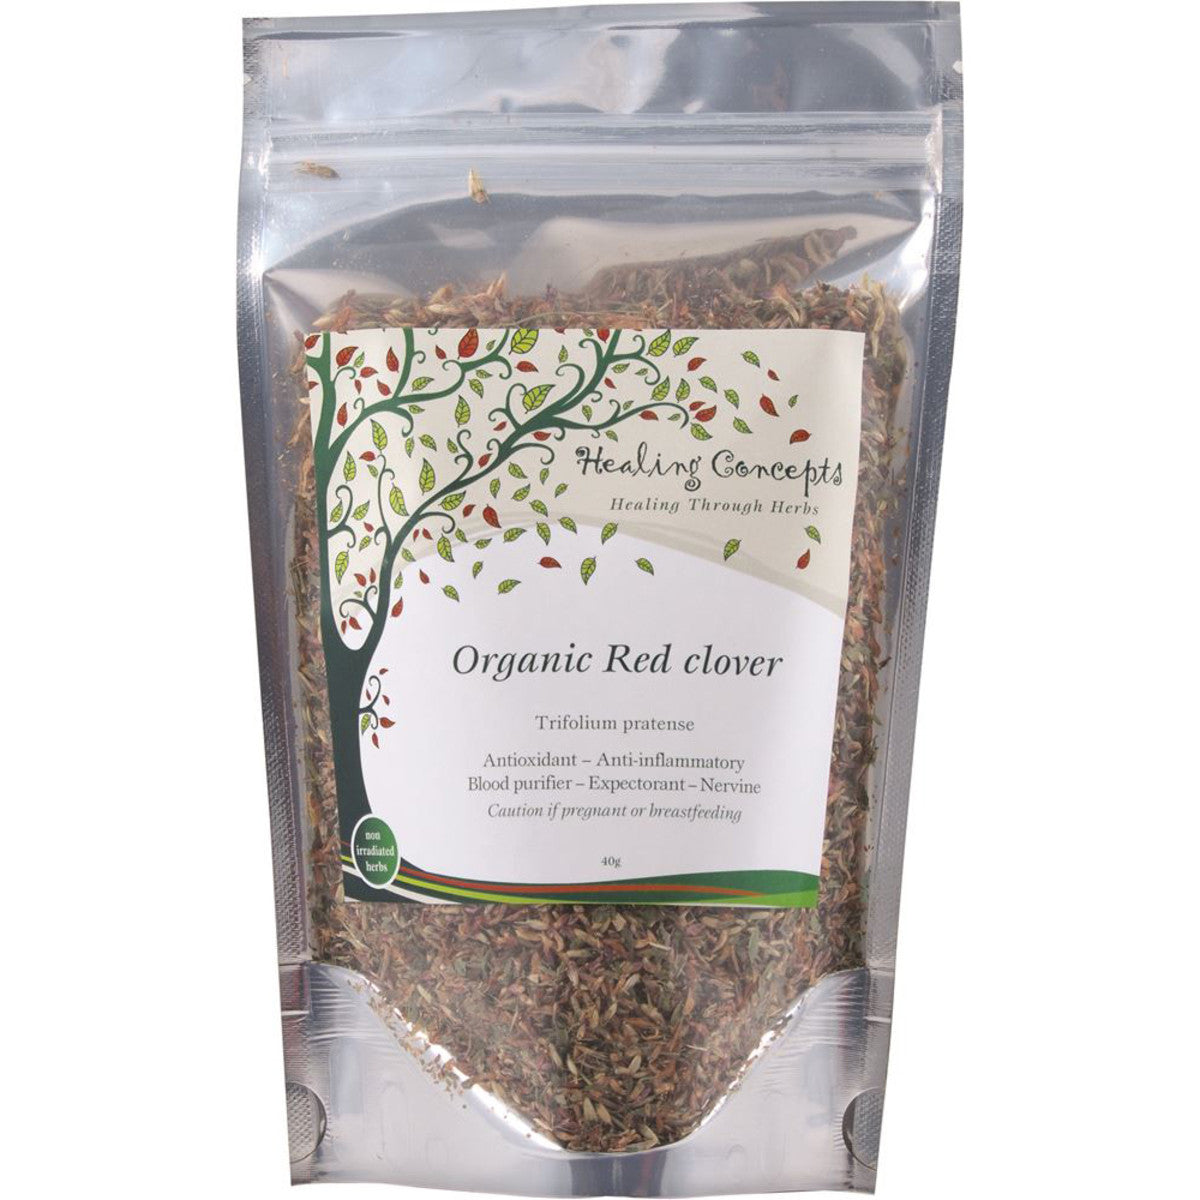 Healing Concepts Red Clover Tea 30g, Certified Organic